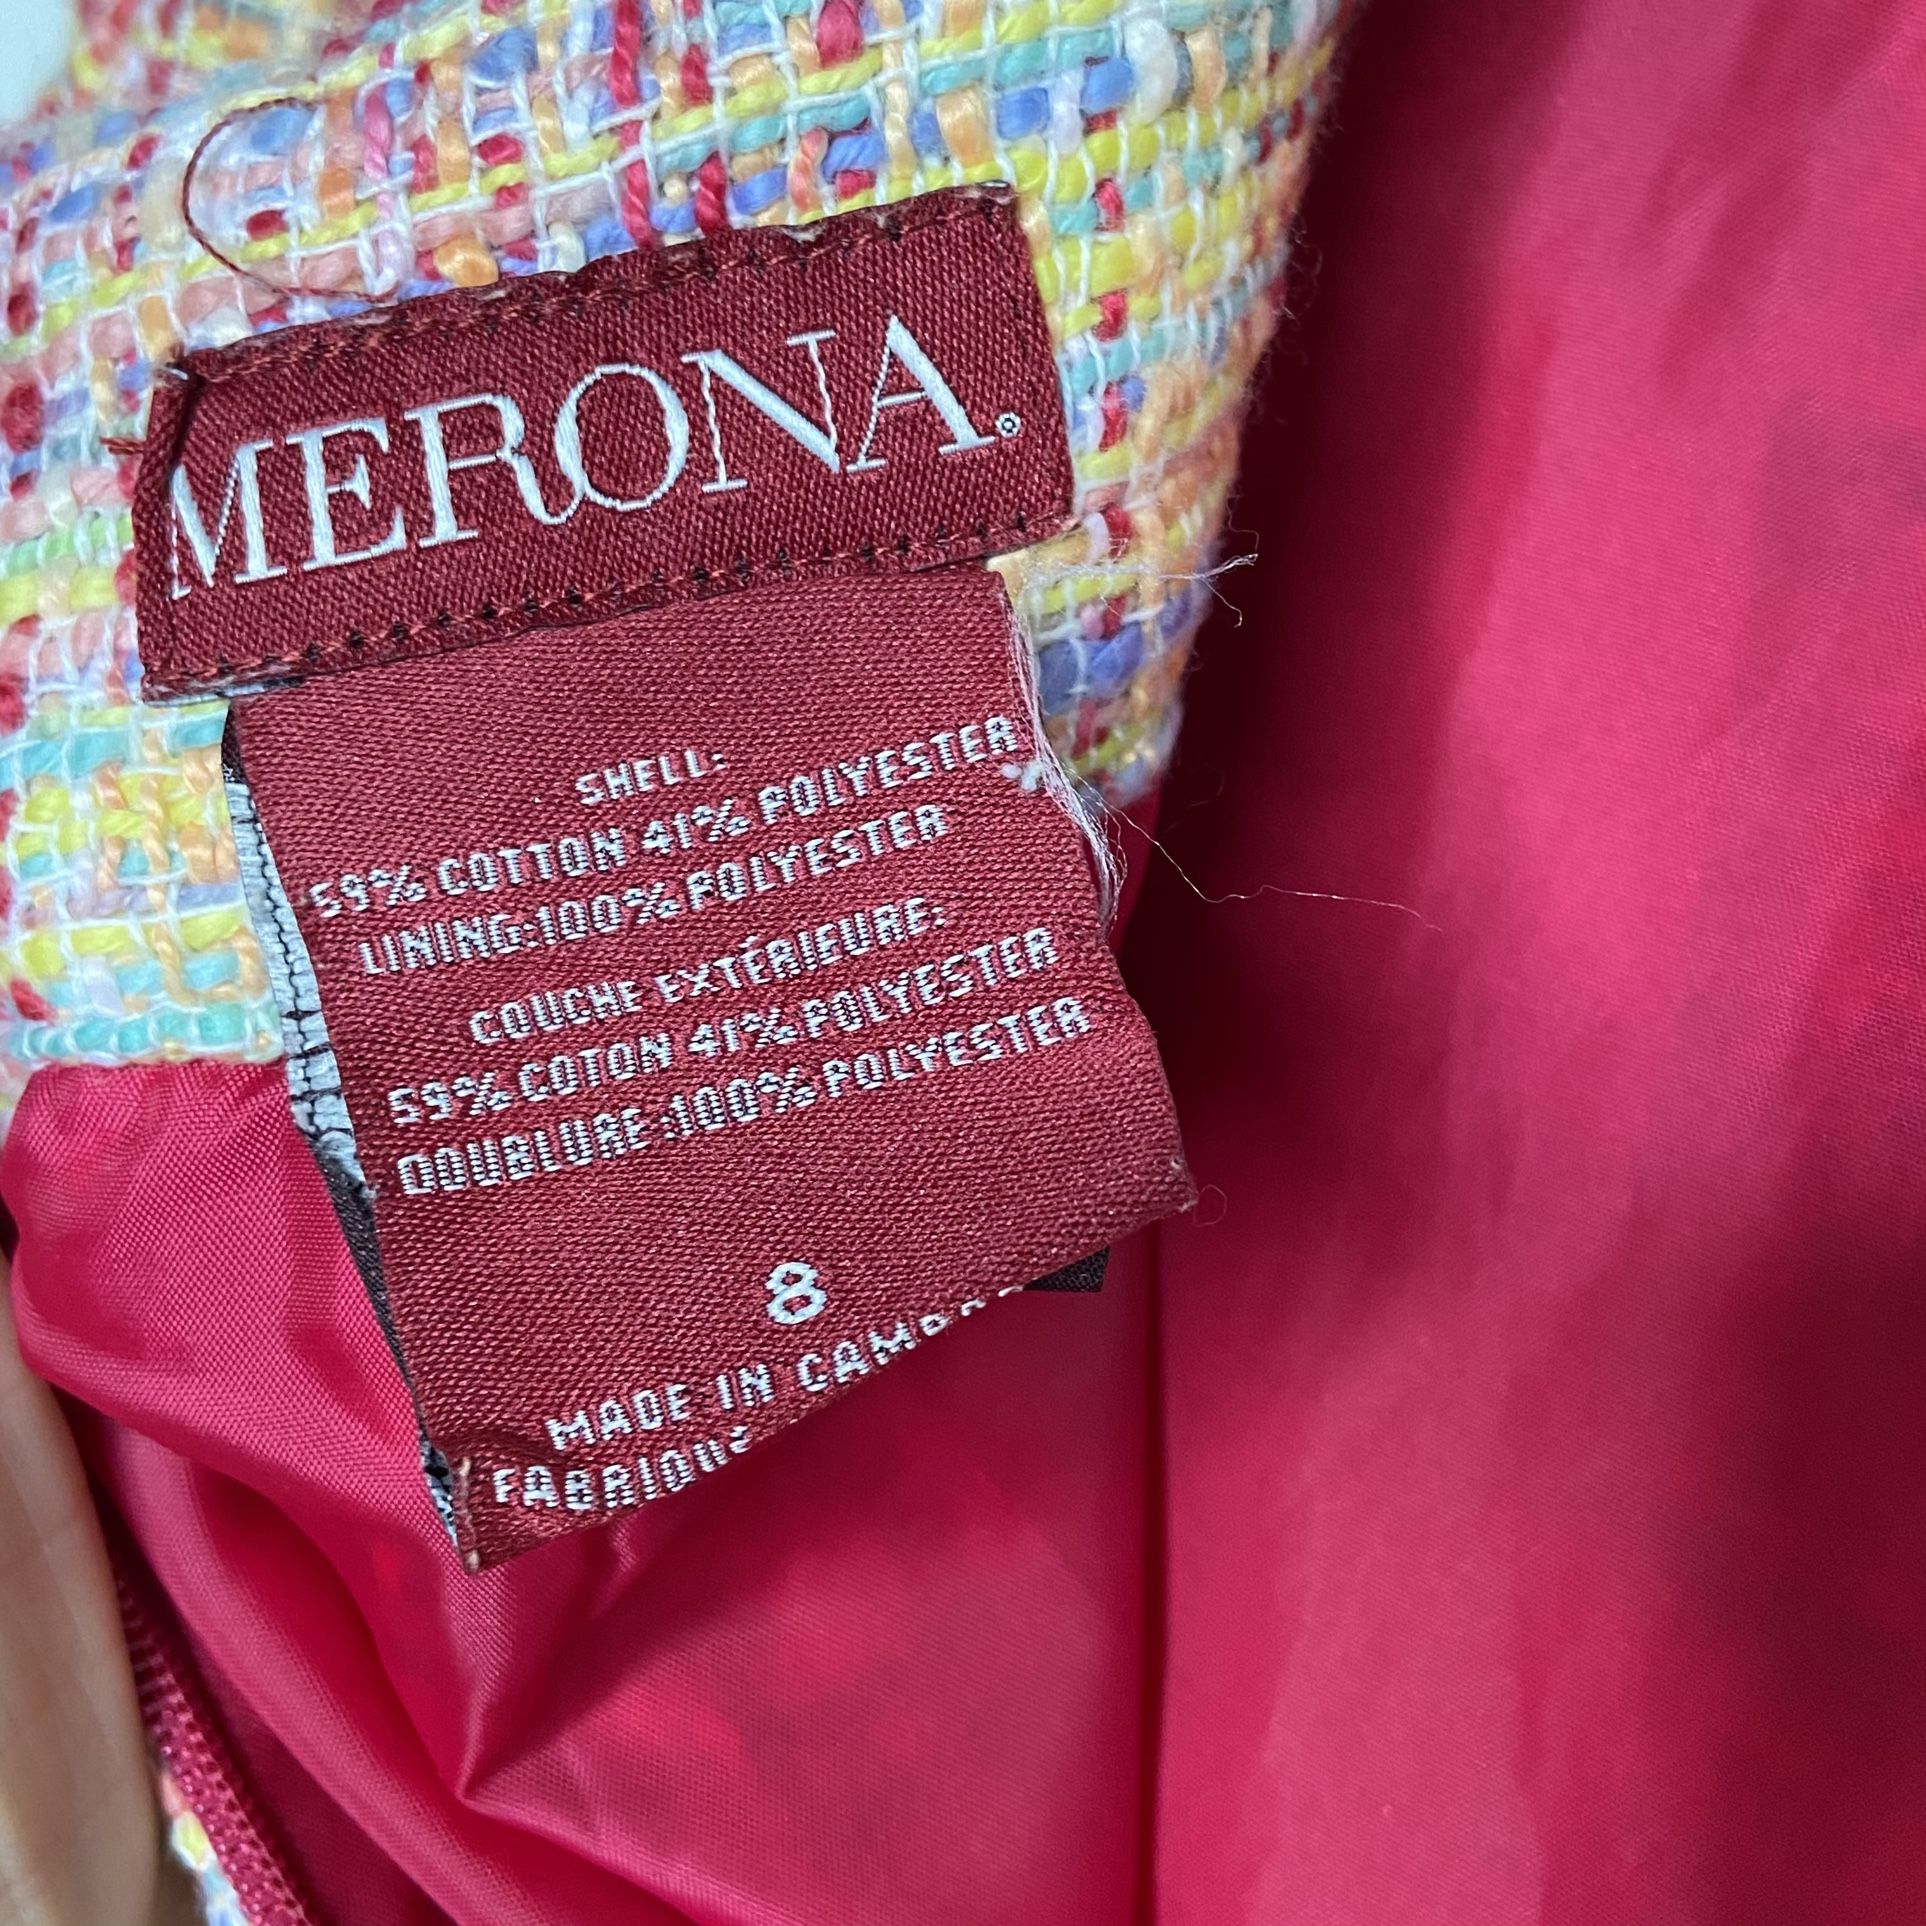 Merona Pastel Pink Yellow and Blue Rainbow Tweed Pencil Skirt | Sz 8